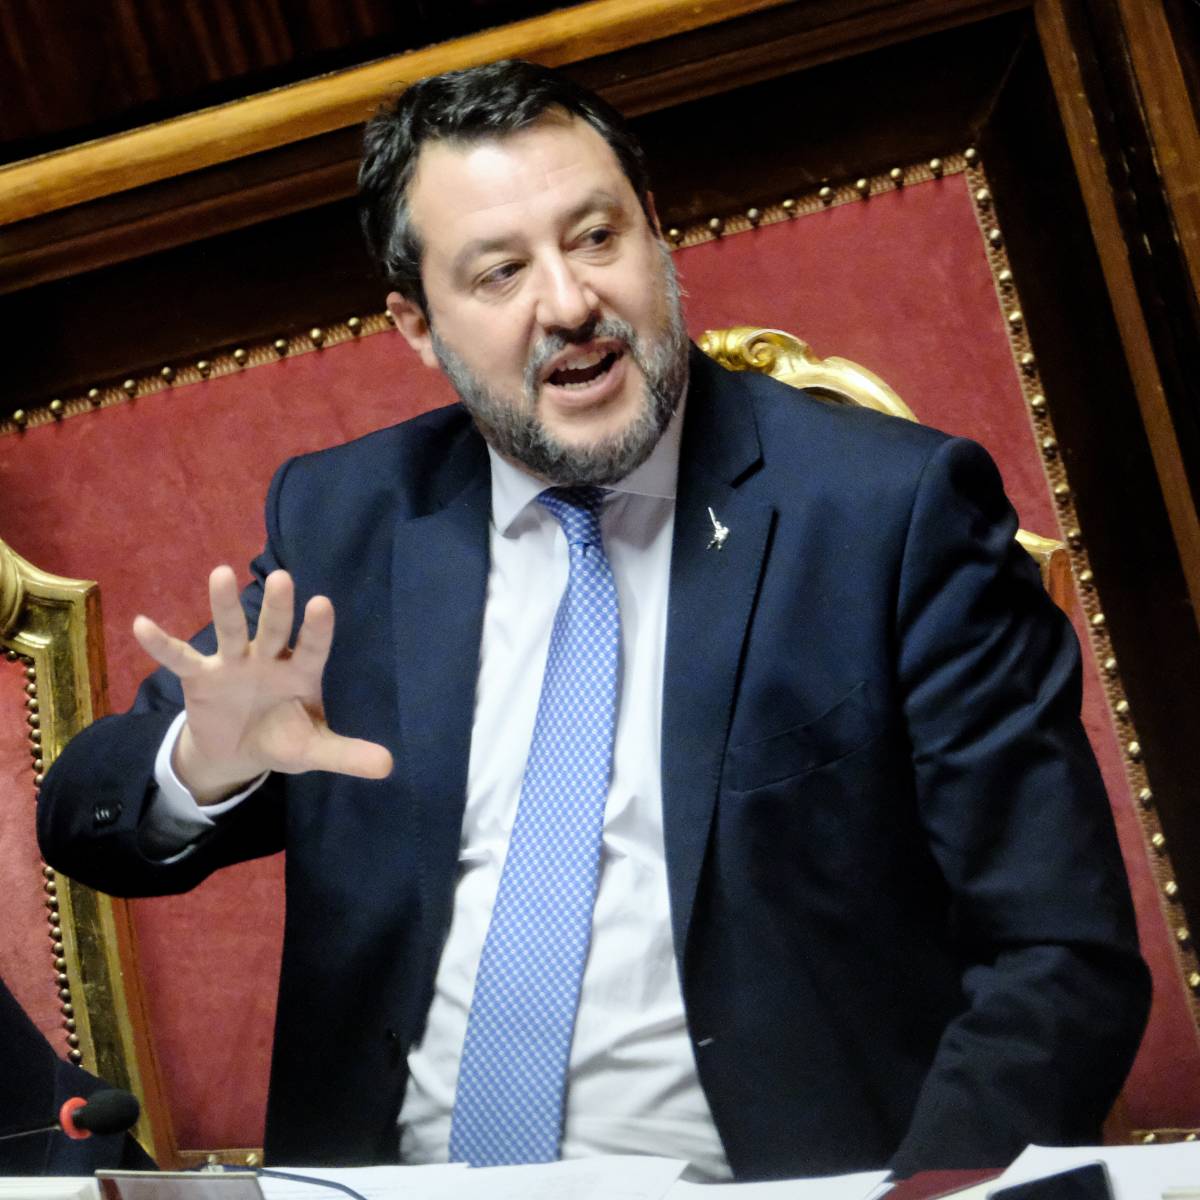 Salvini zittisce i veleni: "Io e Giorgia amici veri"